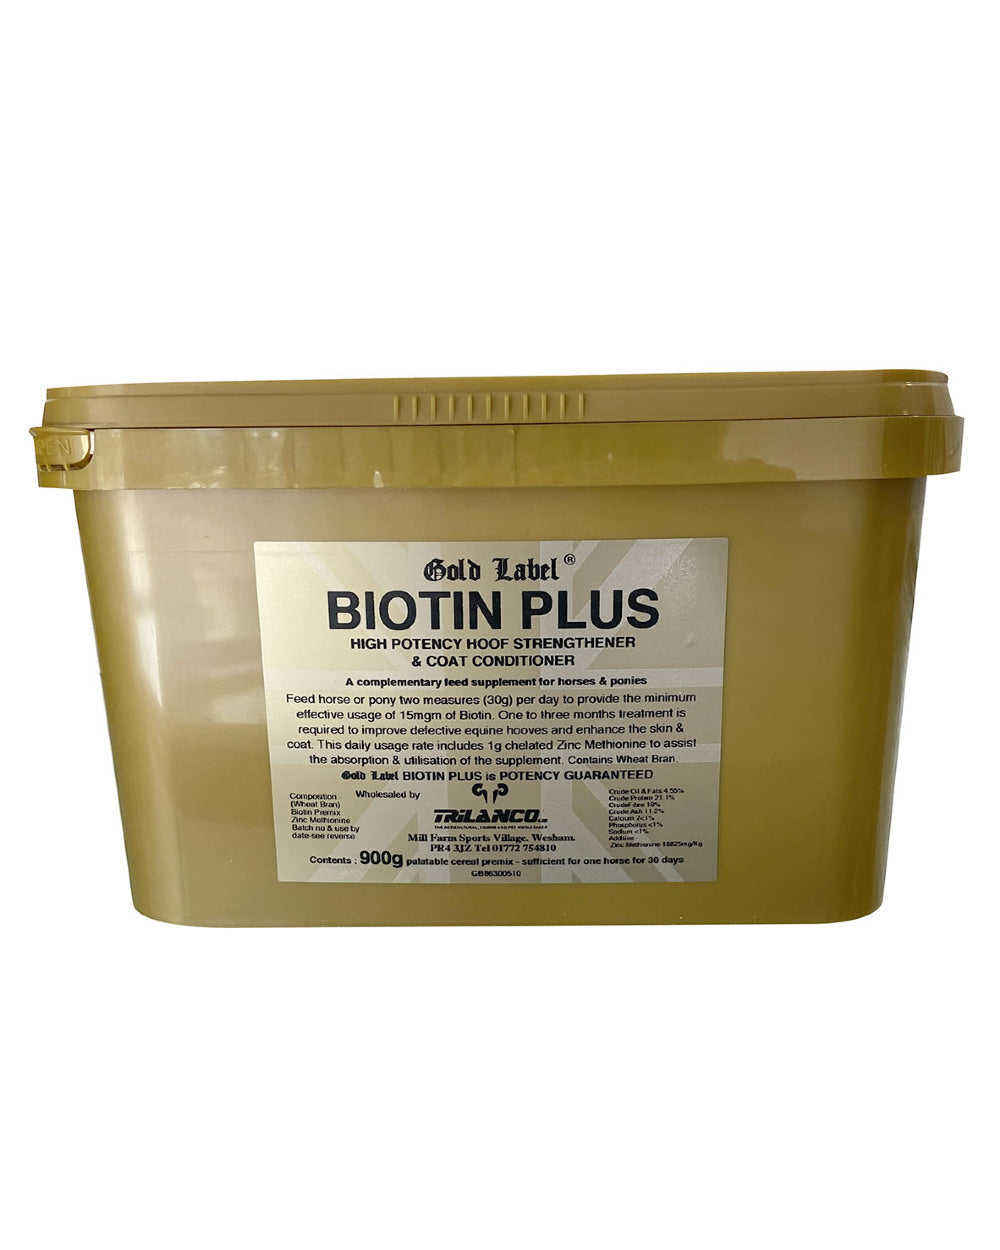 Gold Label Biotin Plus On A White Background